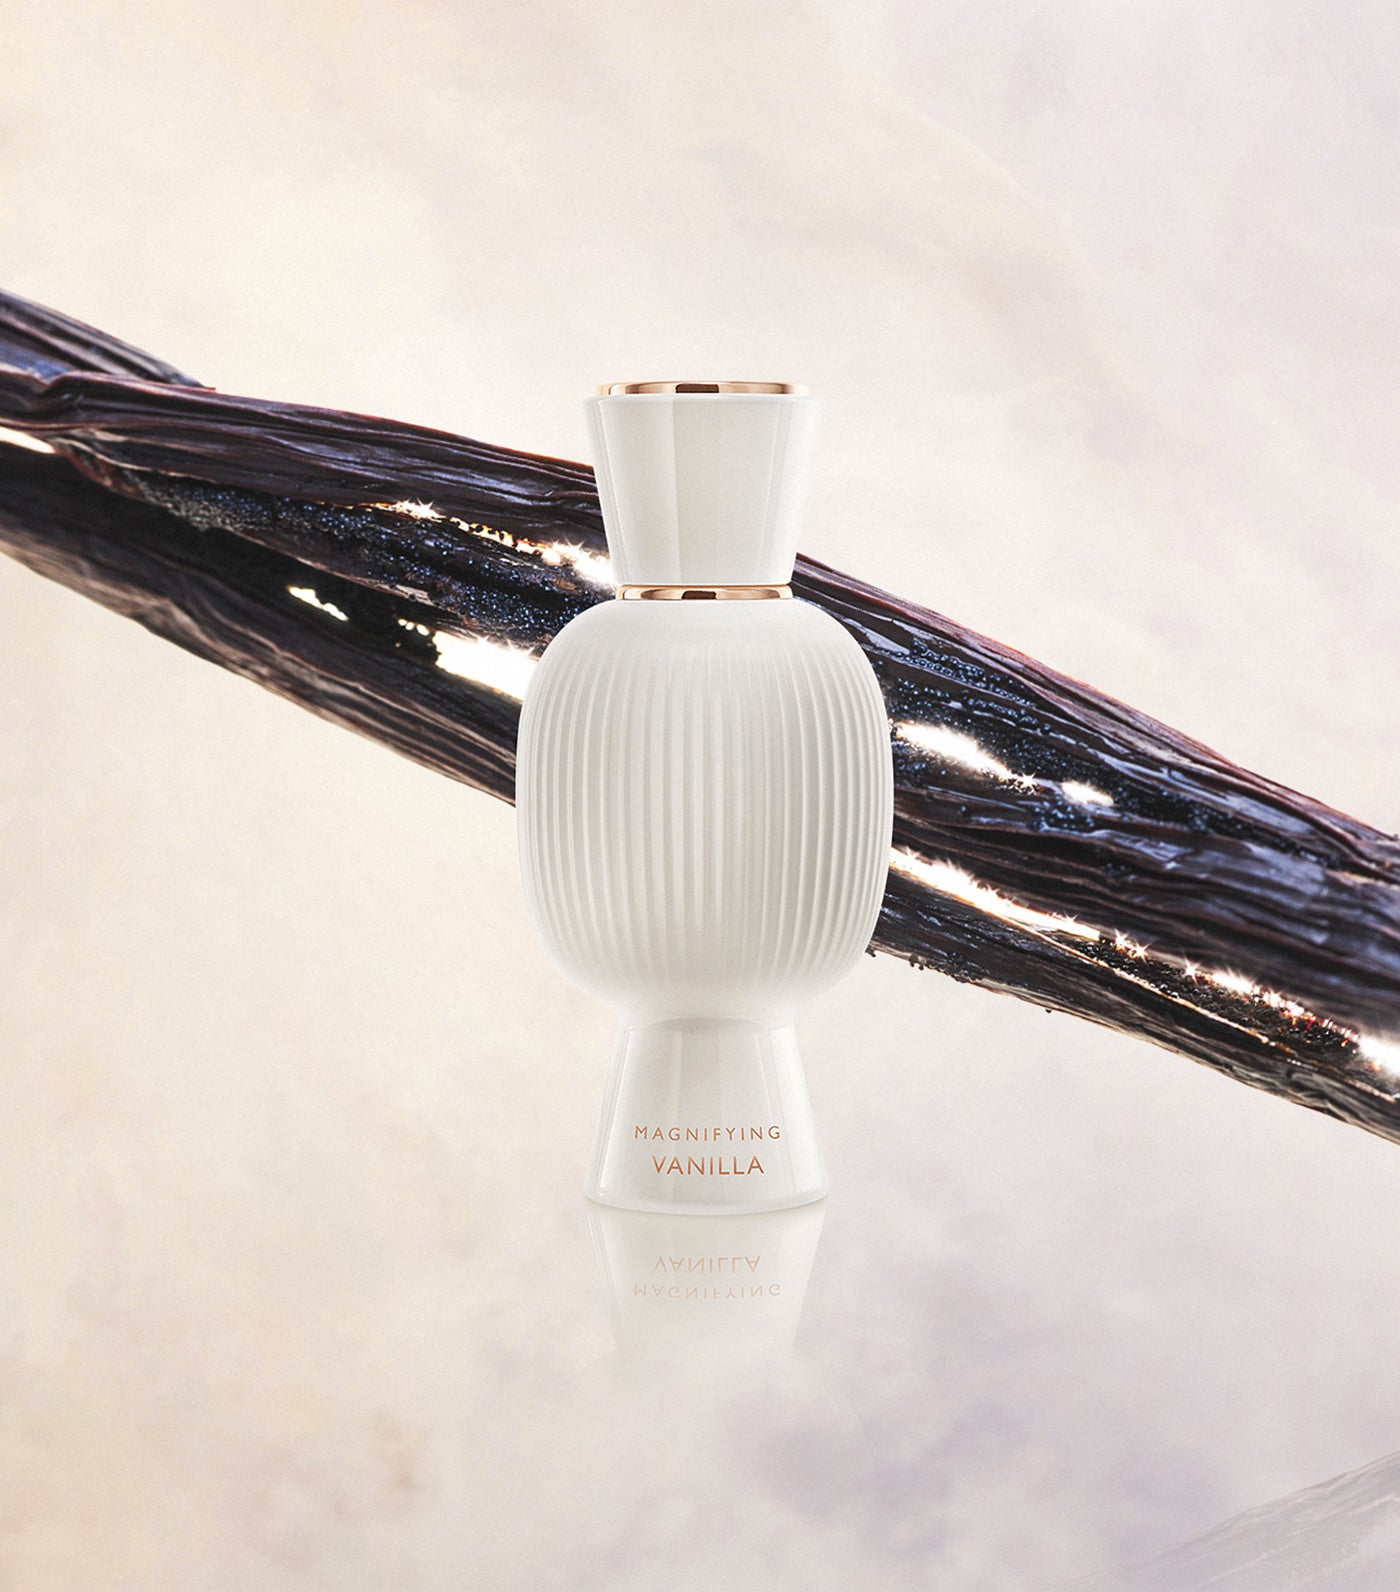 BVLGARI ALLEGRA Magnifying Vanilla Eau De Parfum